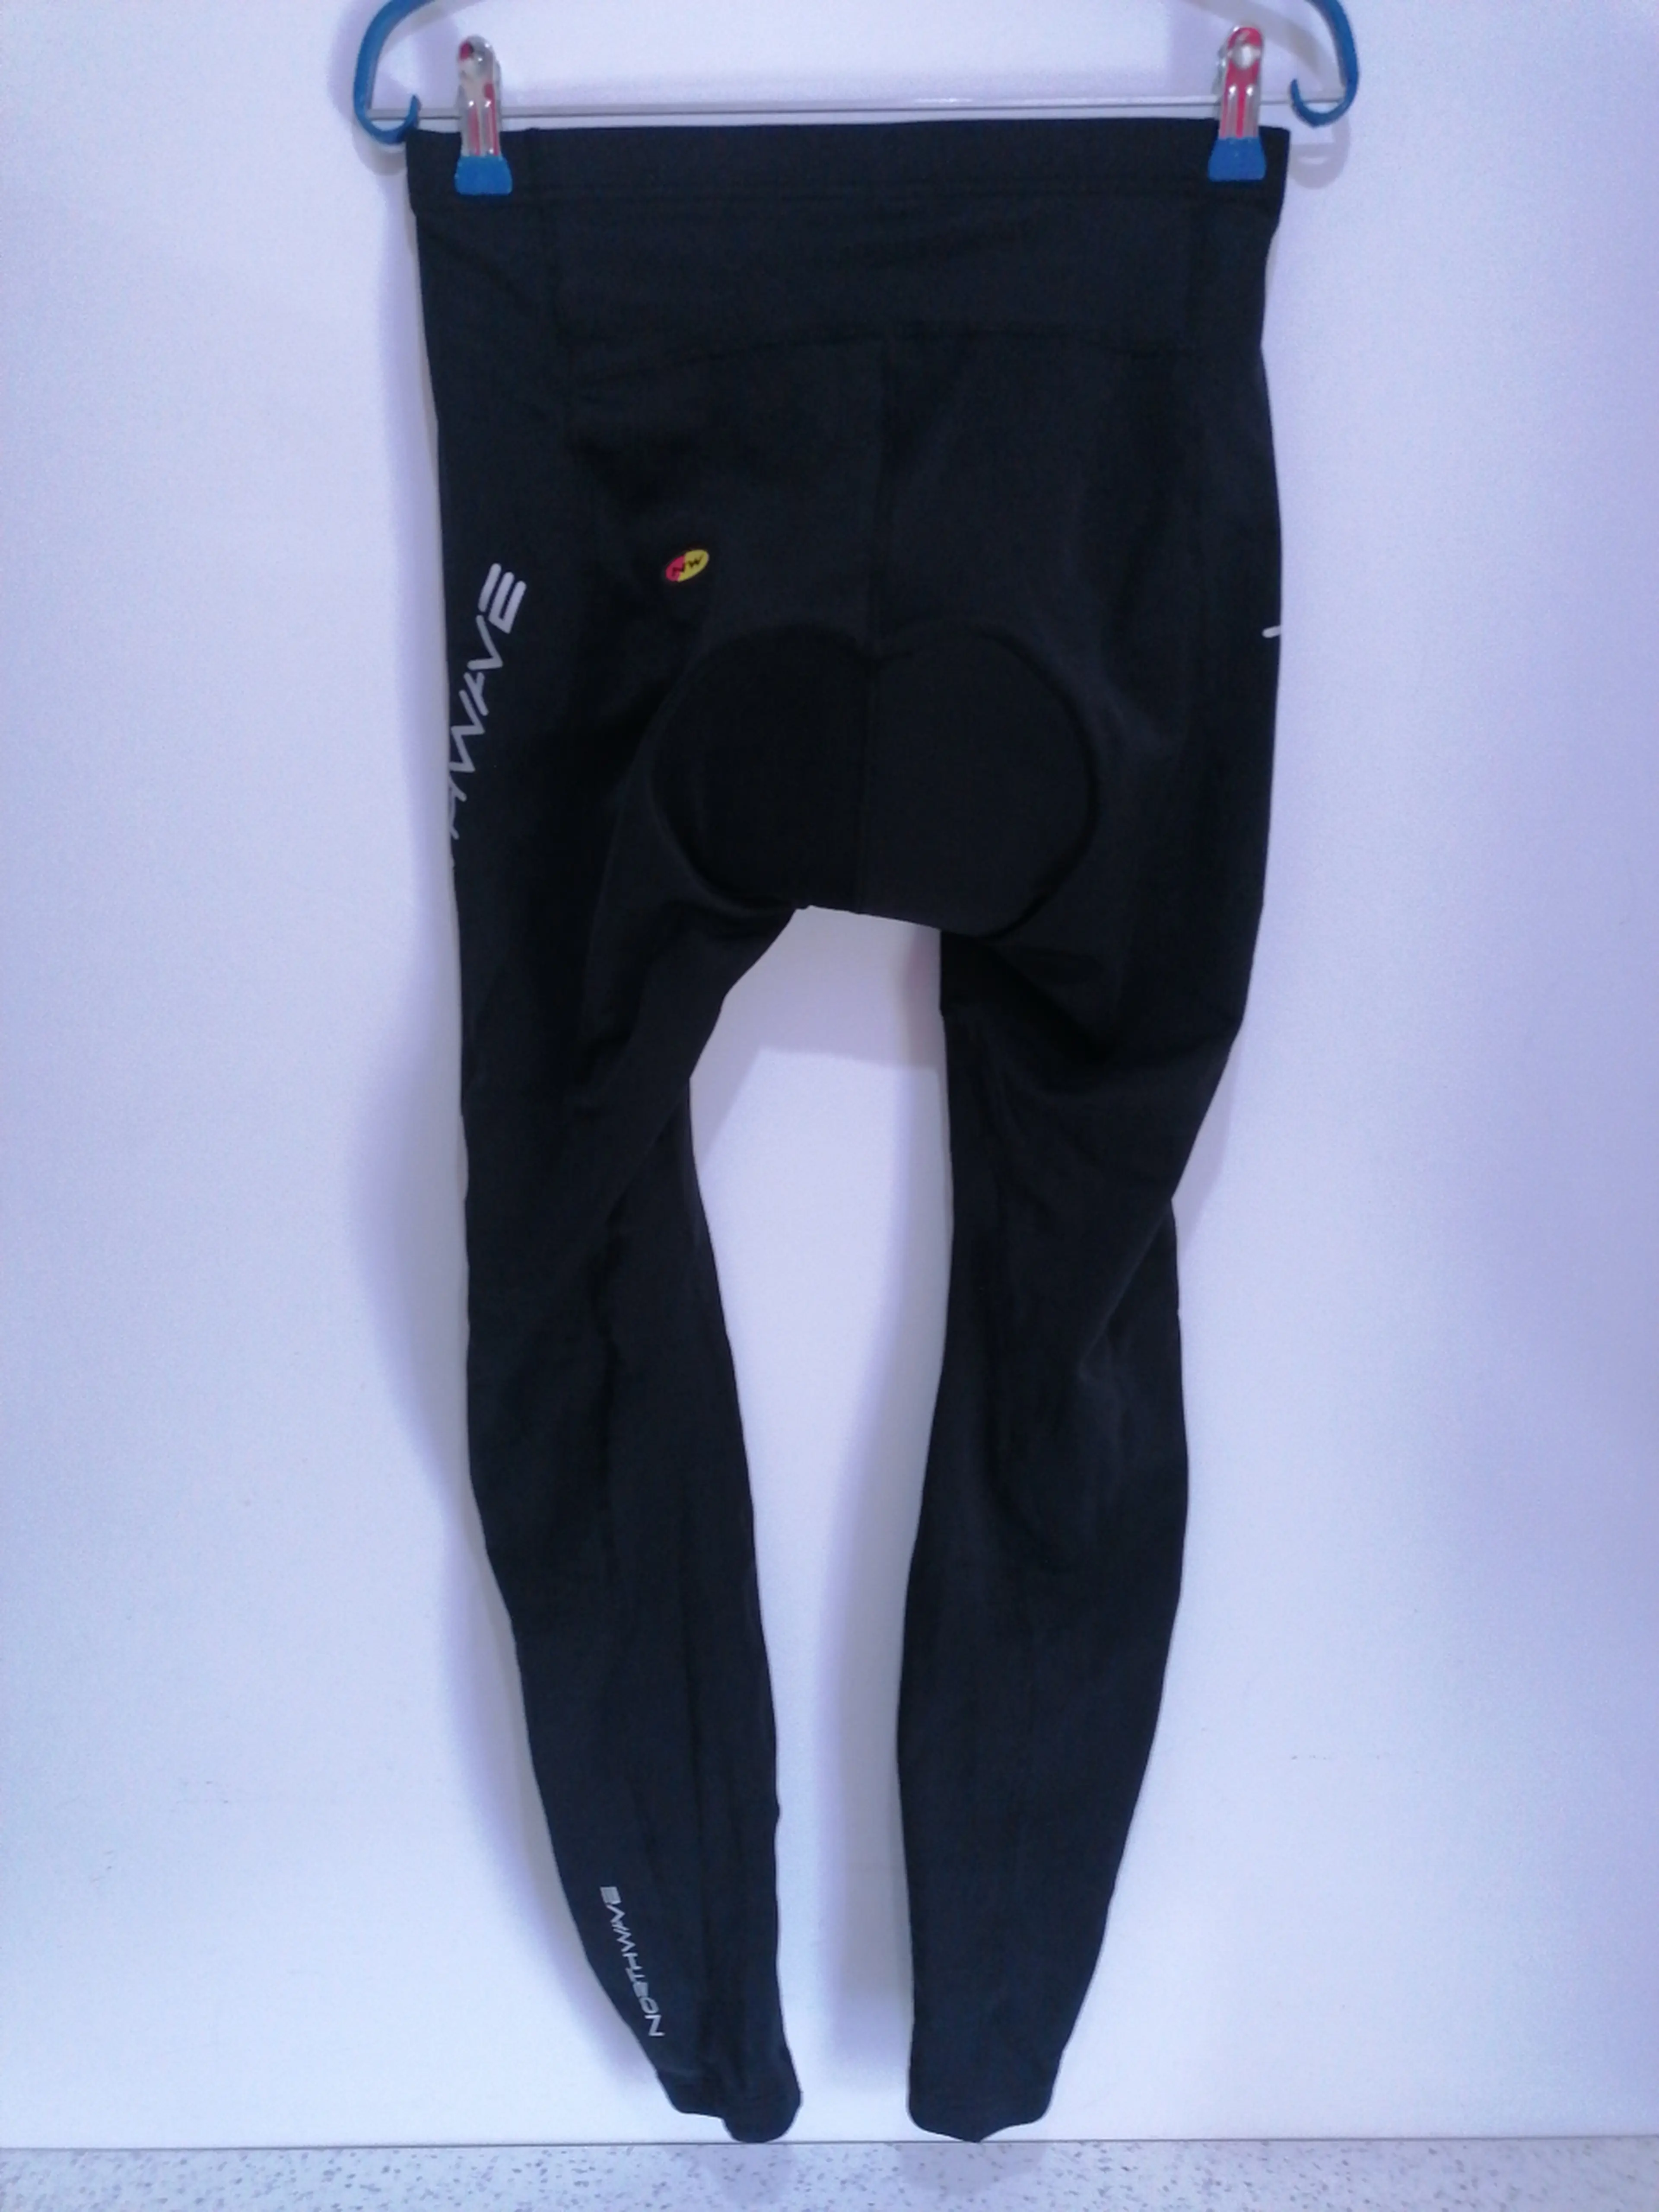 2. Pantaloni Northwave size XL